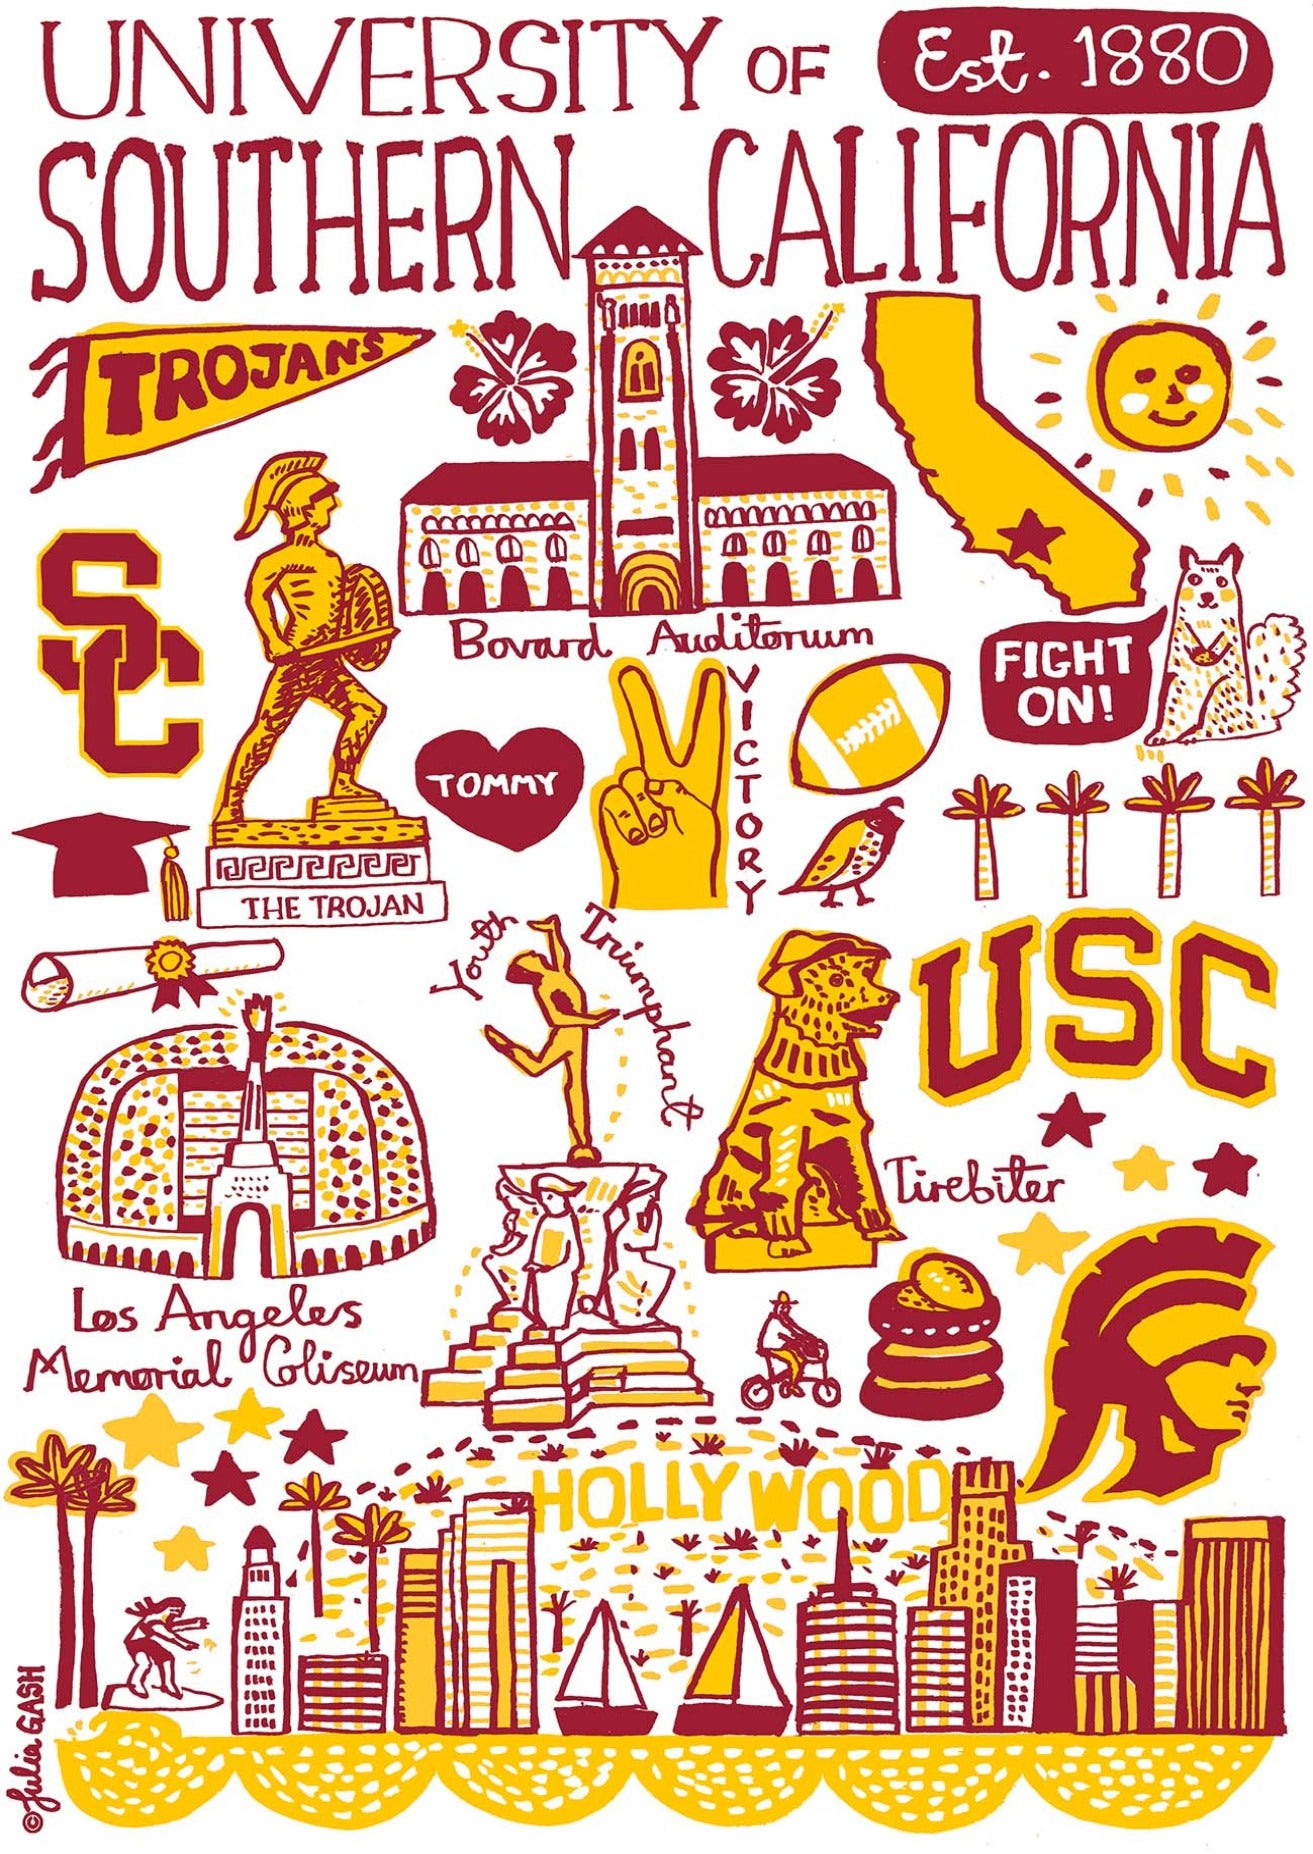 University of Southern California by Julia Gash